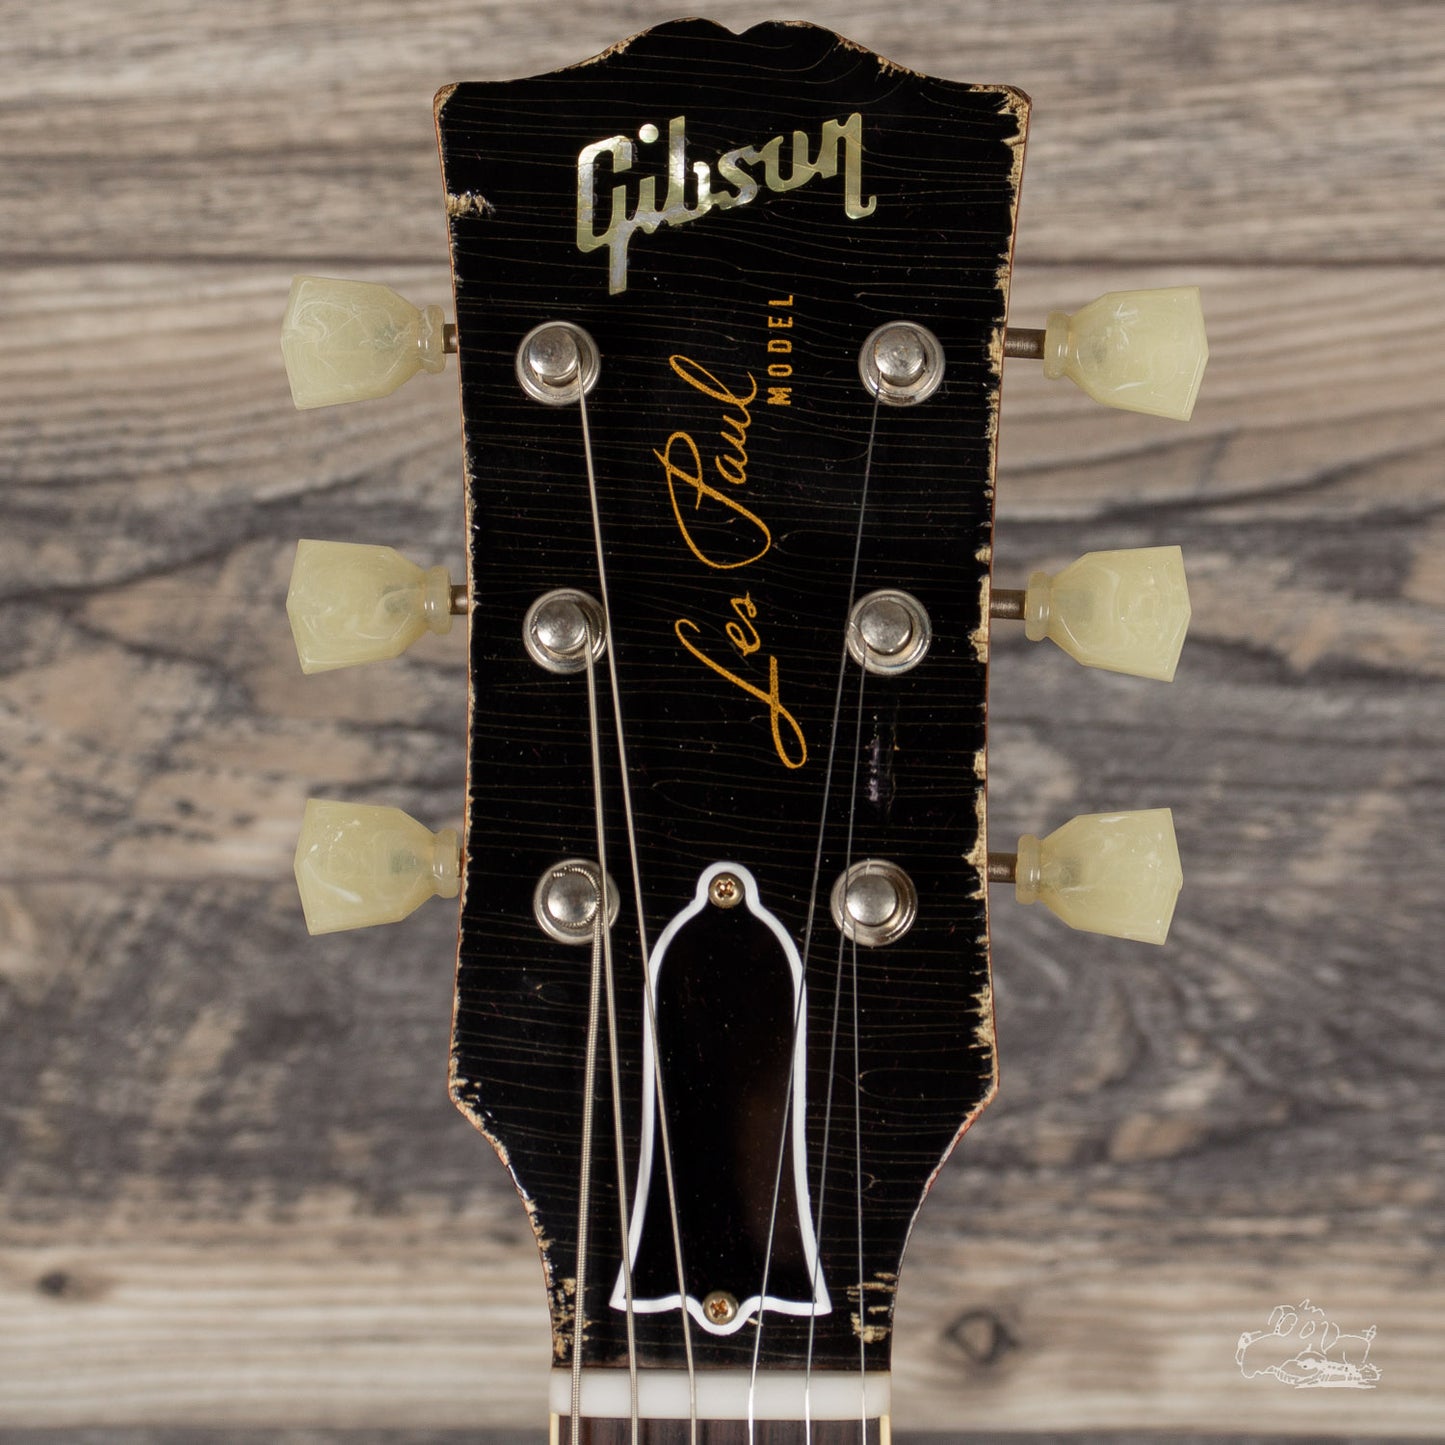 2014 Gibson Custom Shop Joe Bonamossa "Skinnerburst" Aged